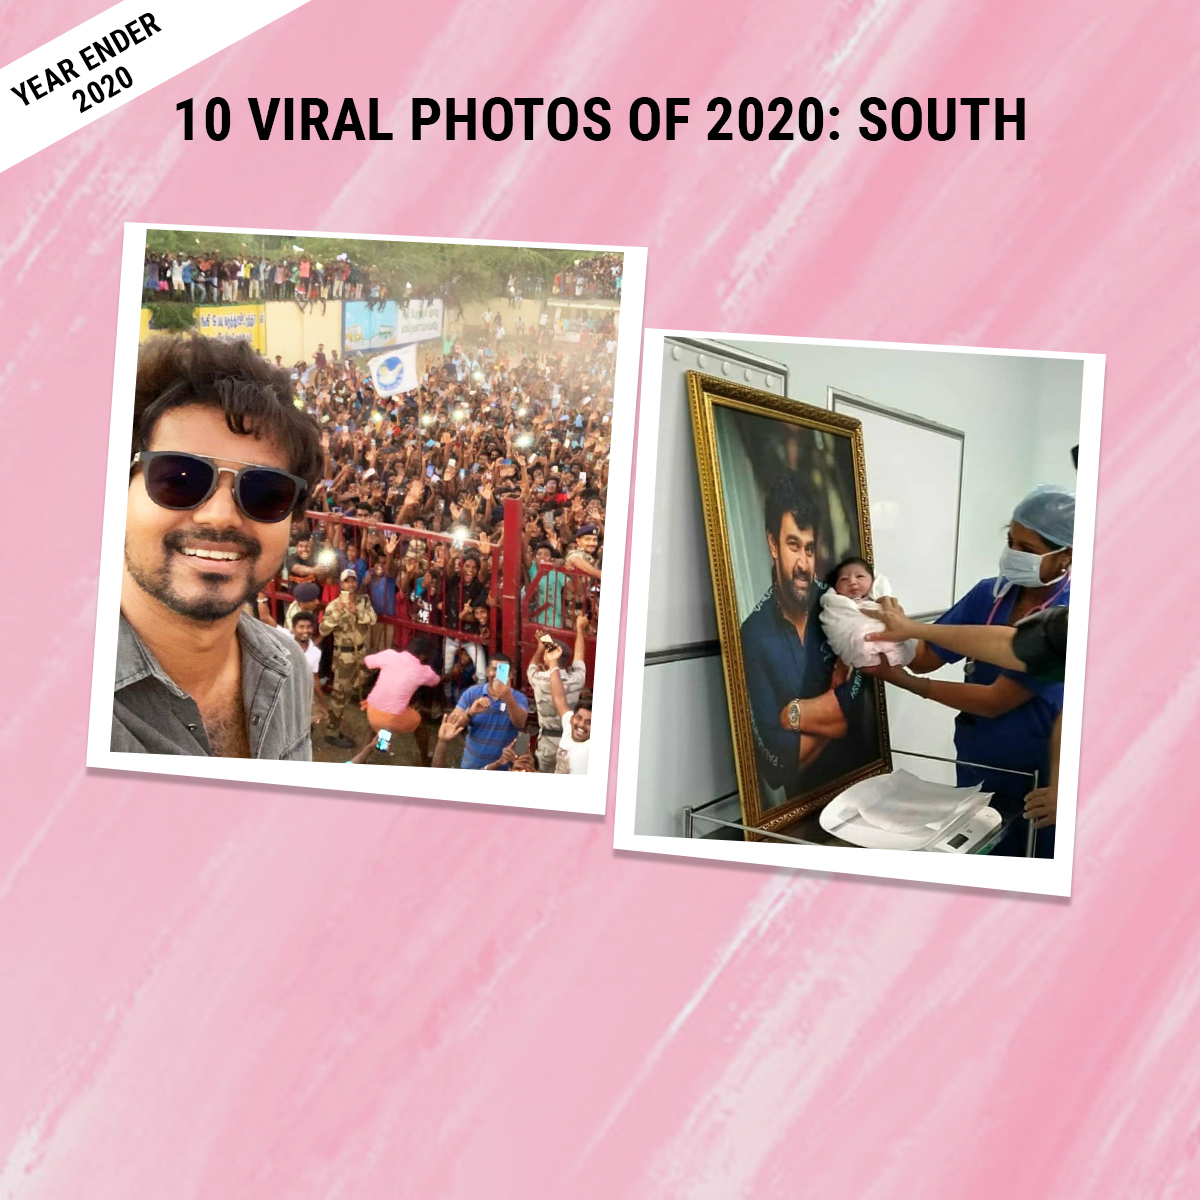 Thalapathy Vijay’s viral selfie to pic of Chiranjeevi Sarja’s son: Top 10 viral South photos of 2020